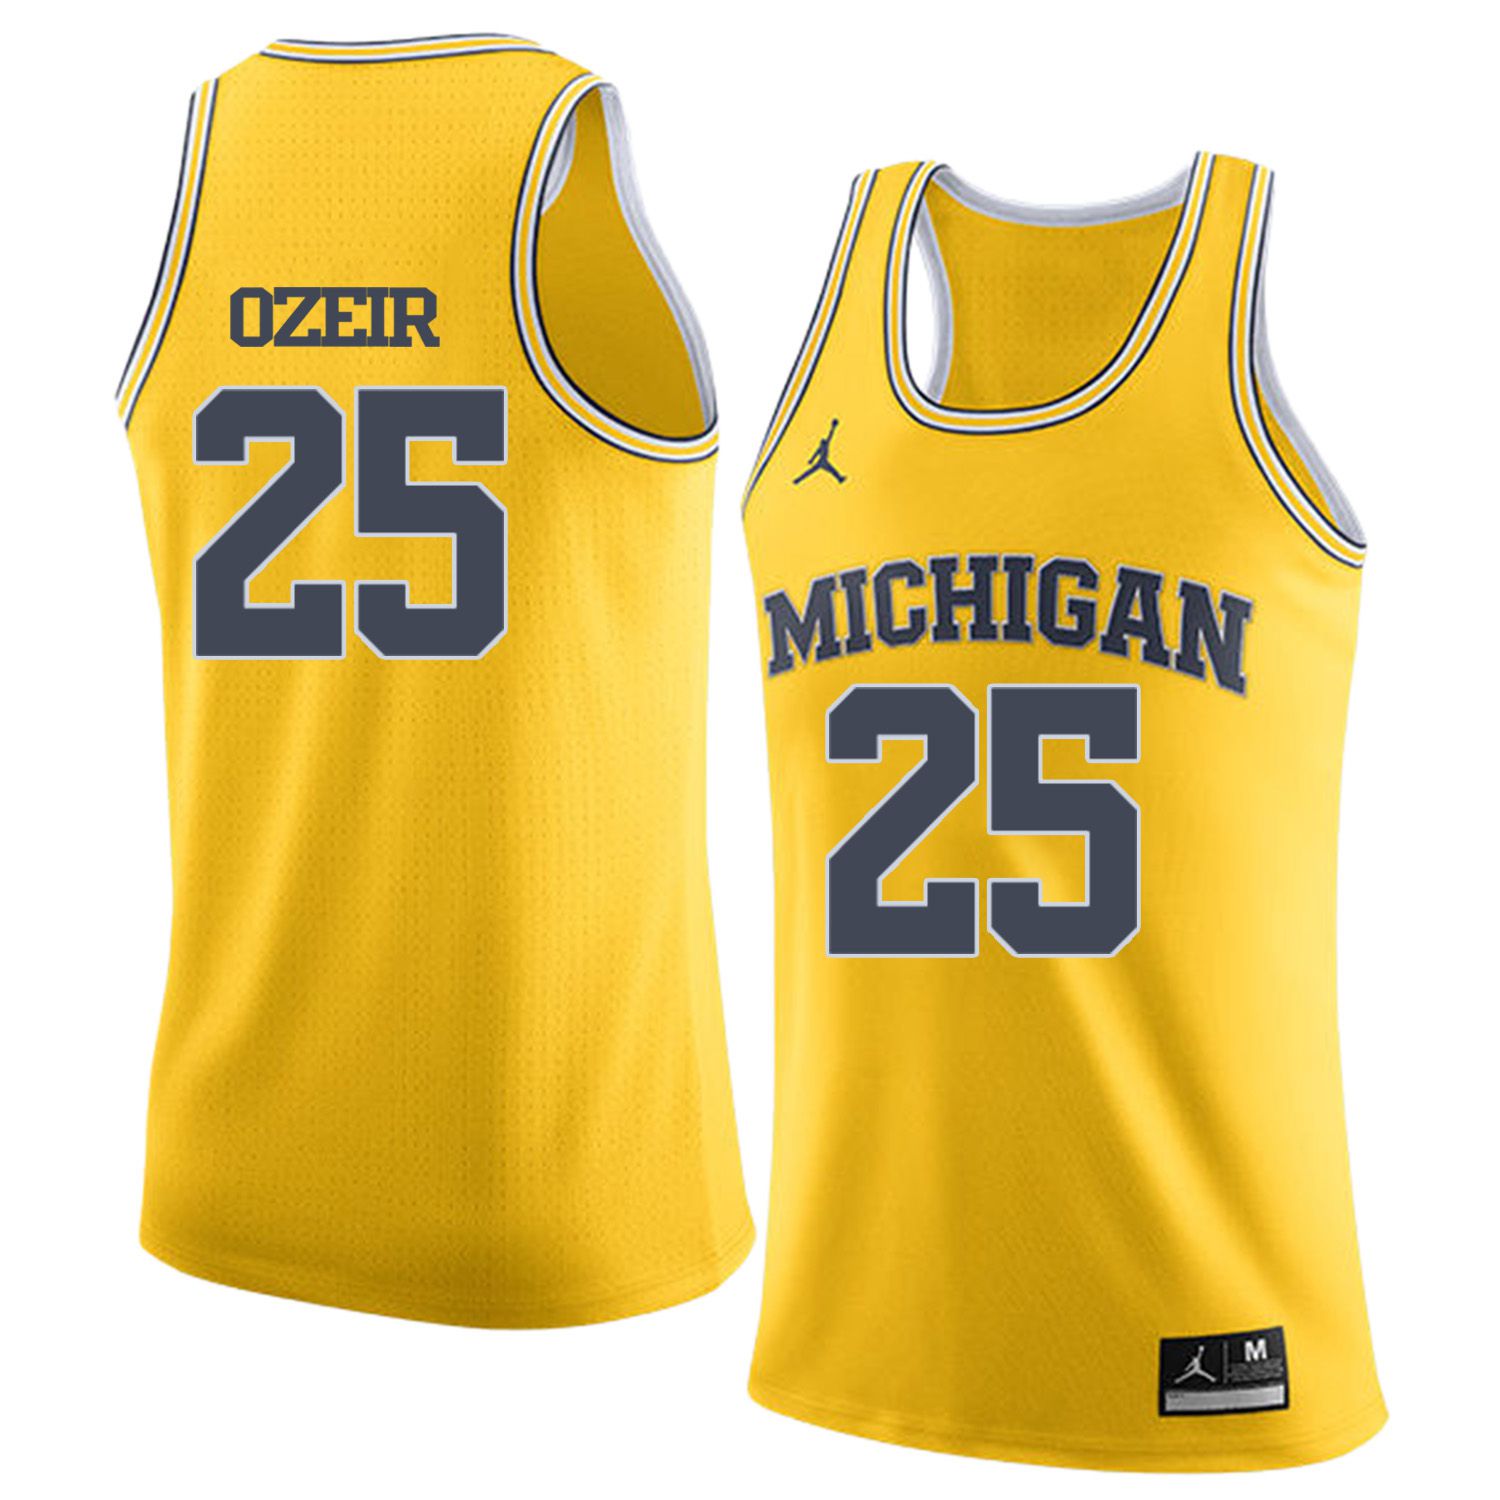 Men Jordan University of Michigan Basketball Yellow #25 Ozeir Customized NCAA Jerseys